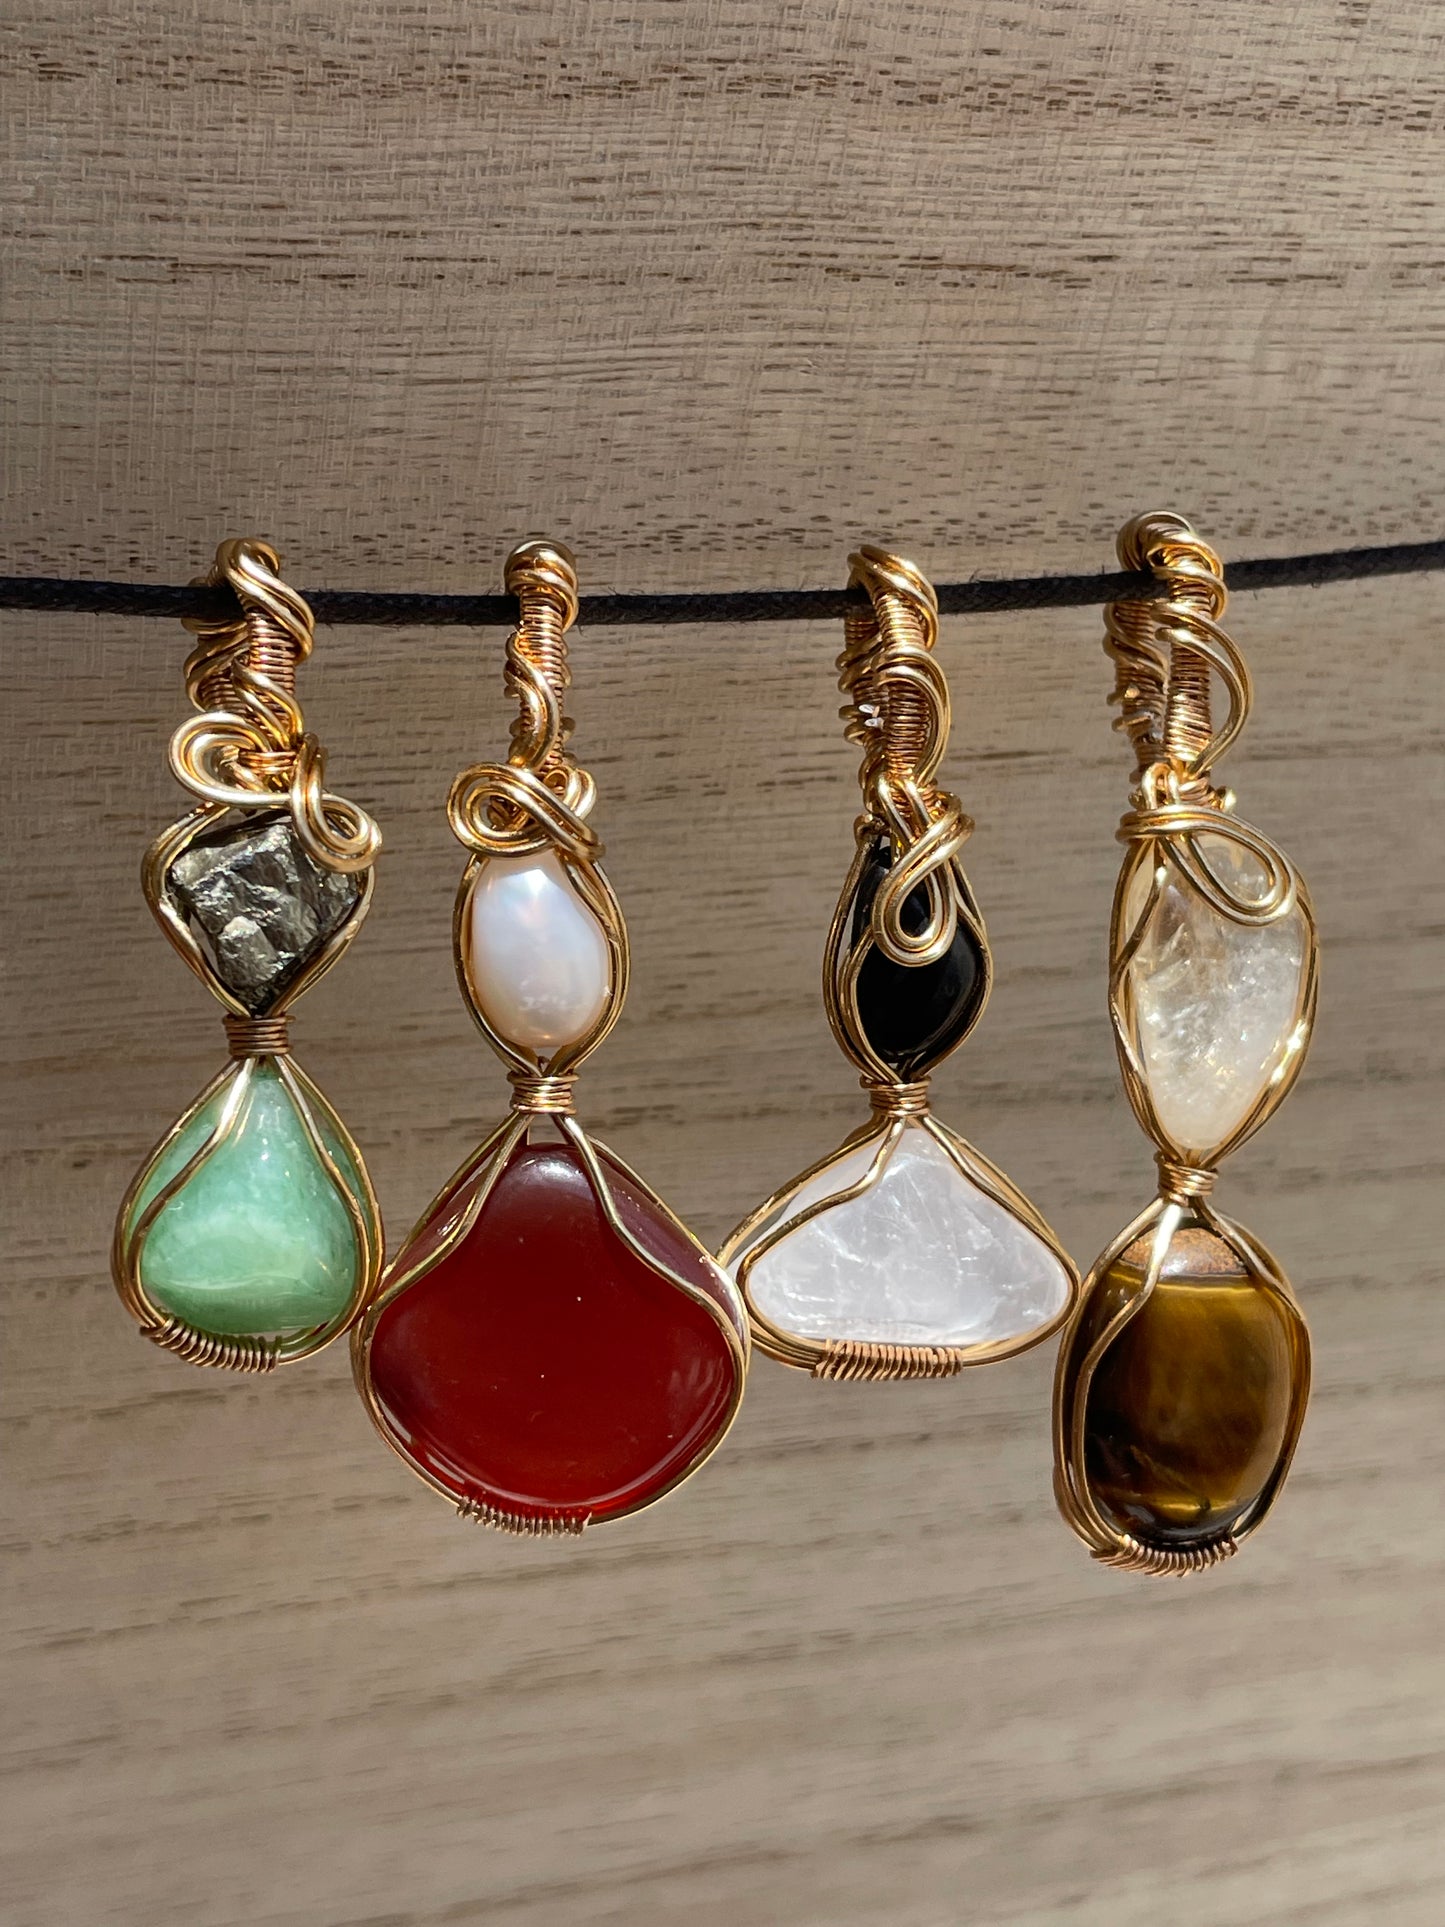 The Jules pendants